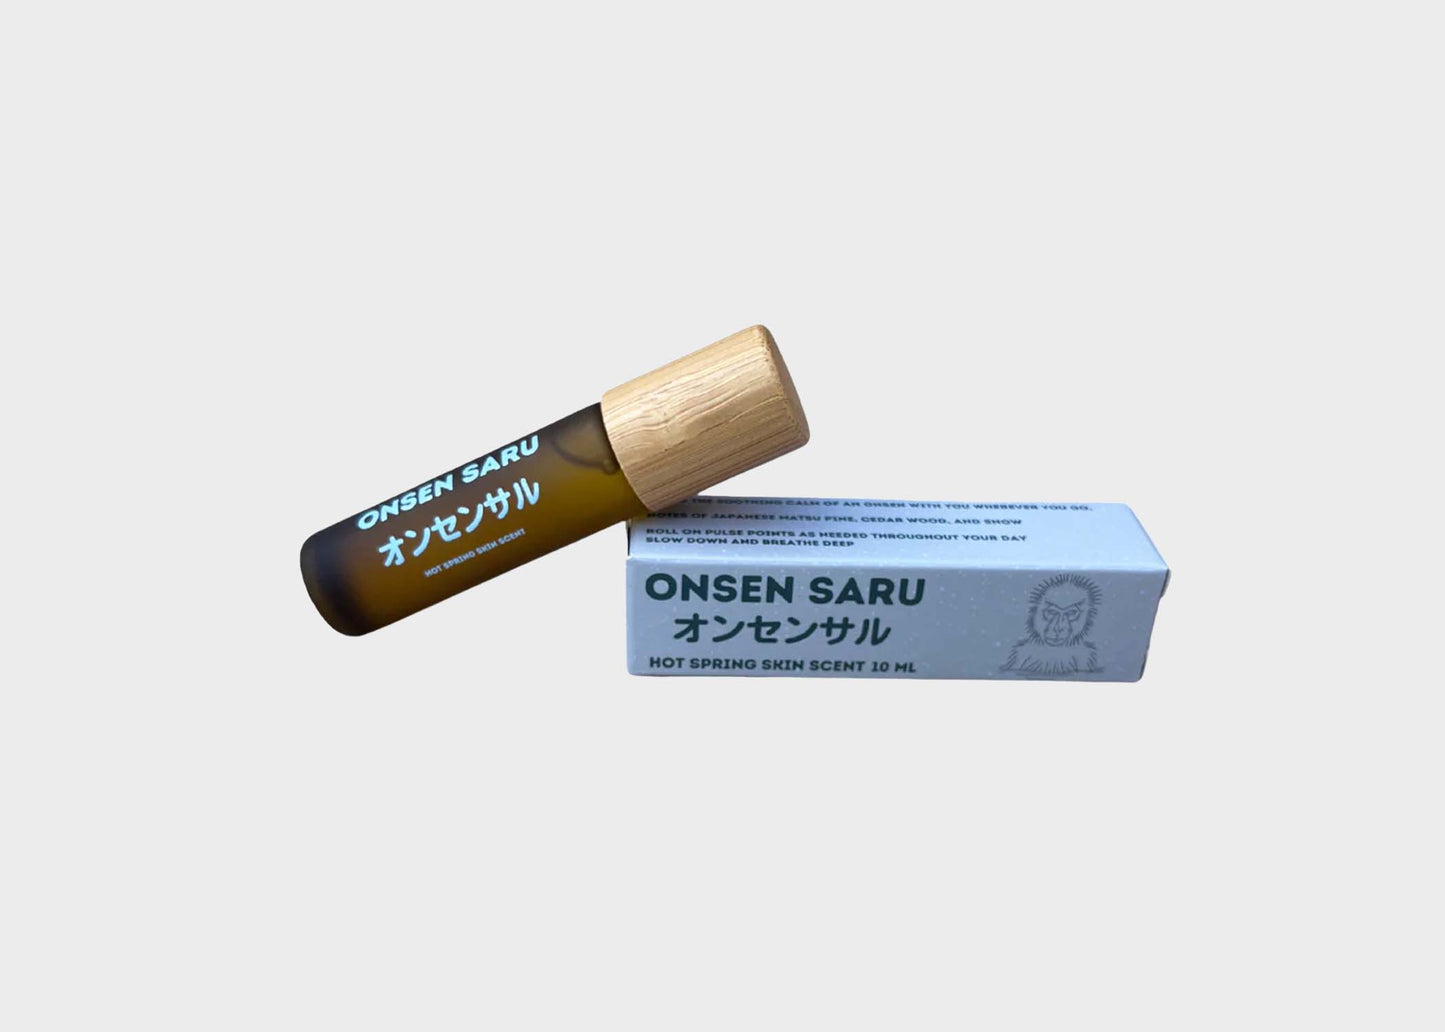 Onsen Saru - Hot Spring Skin Scent with box